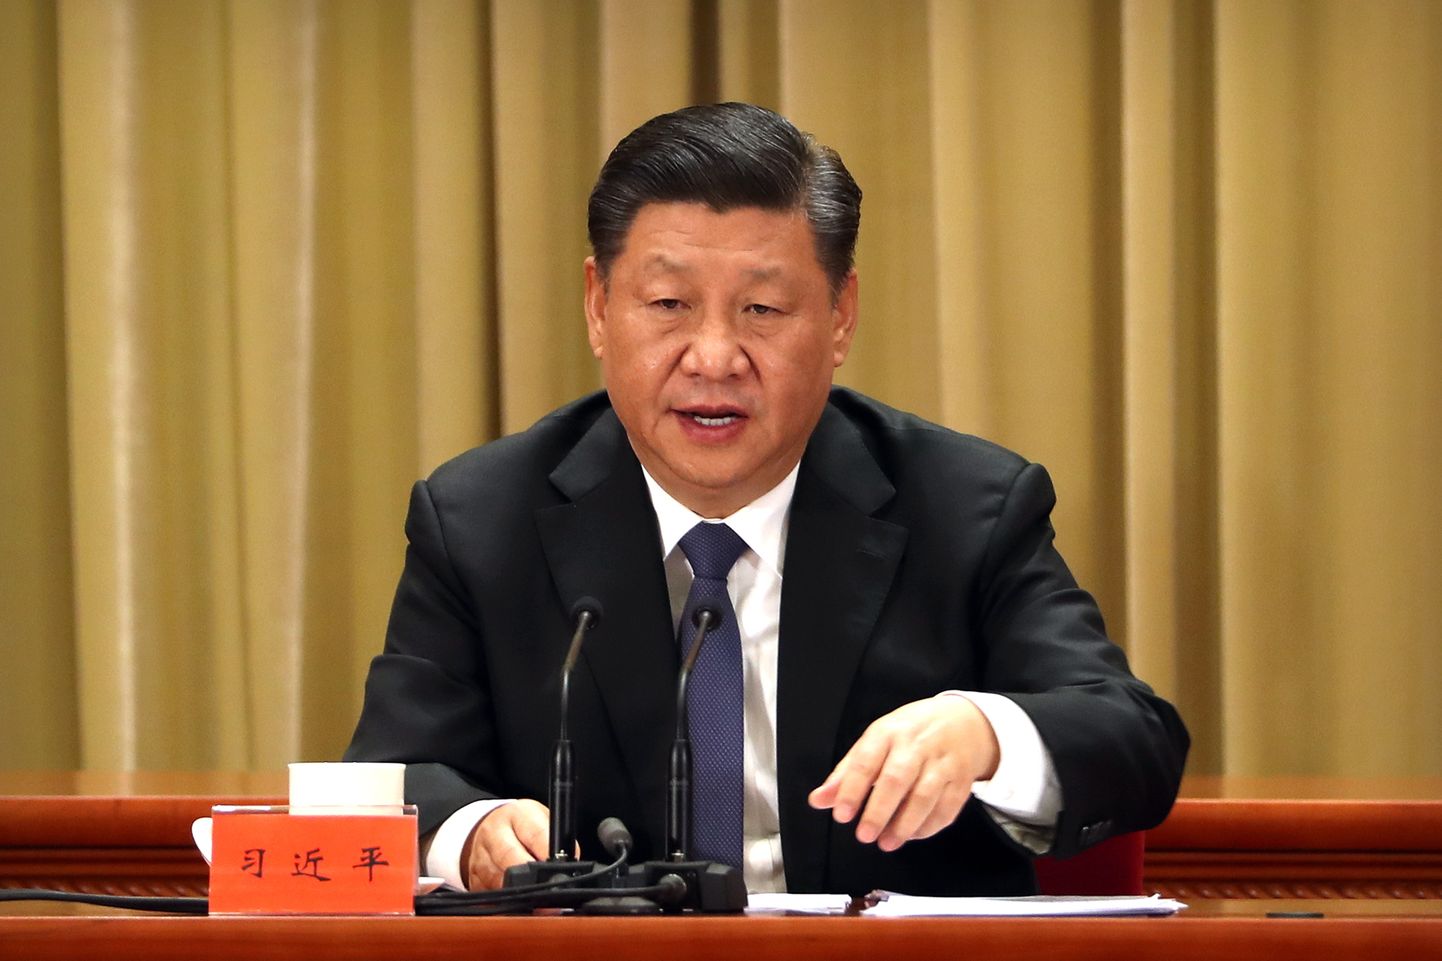 Hiina president Xi Jinping täna Pekingis kõnet pidamas.